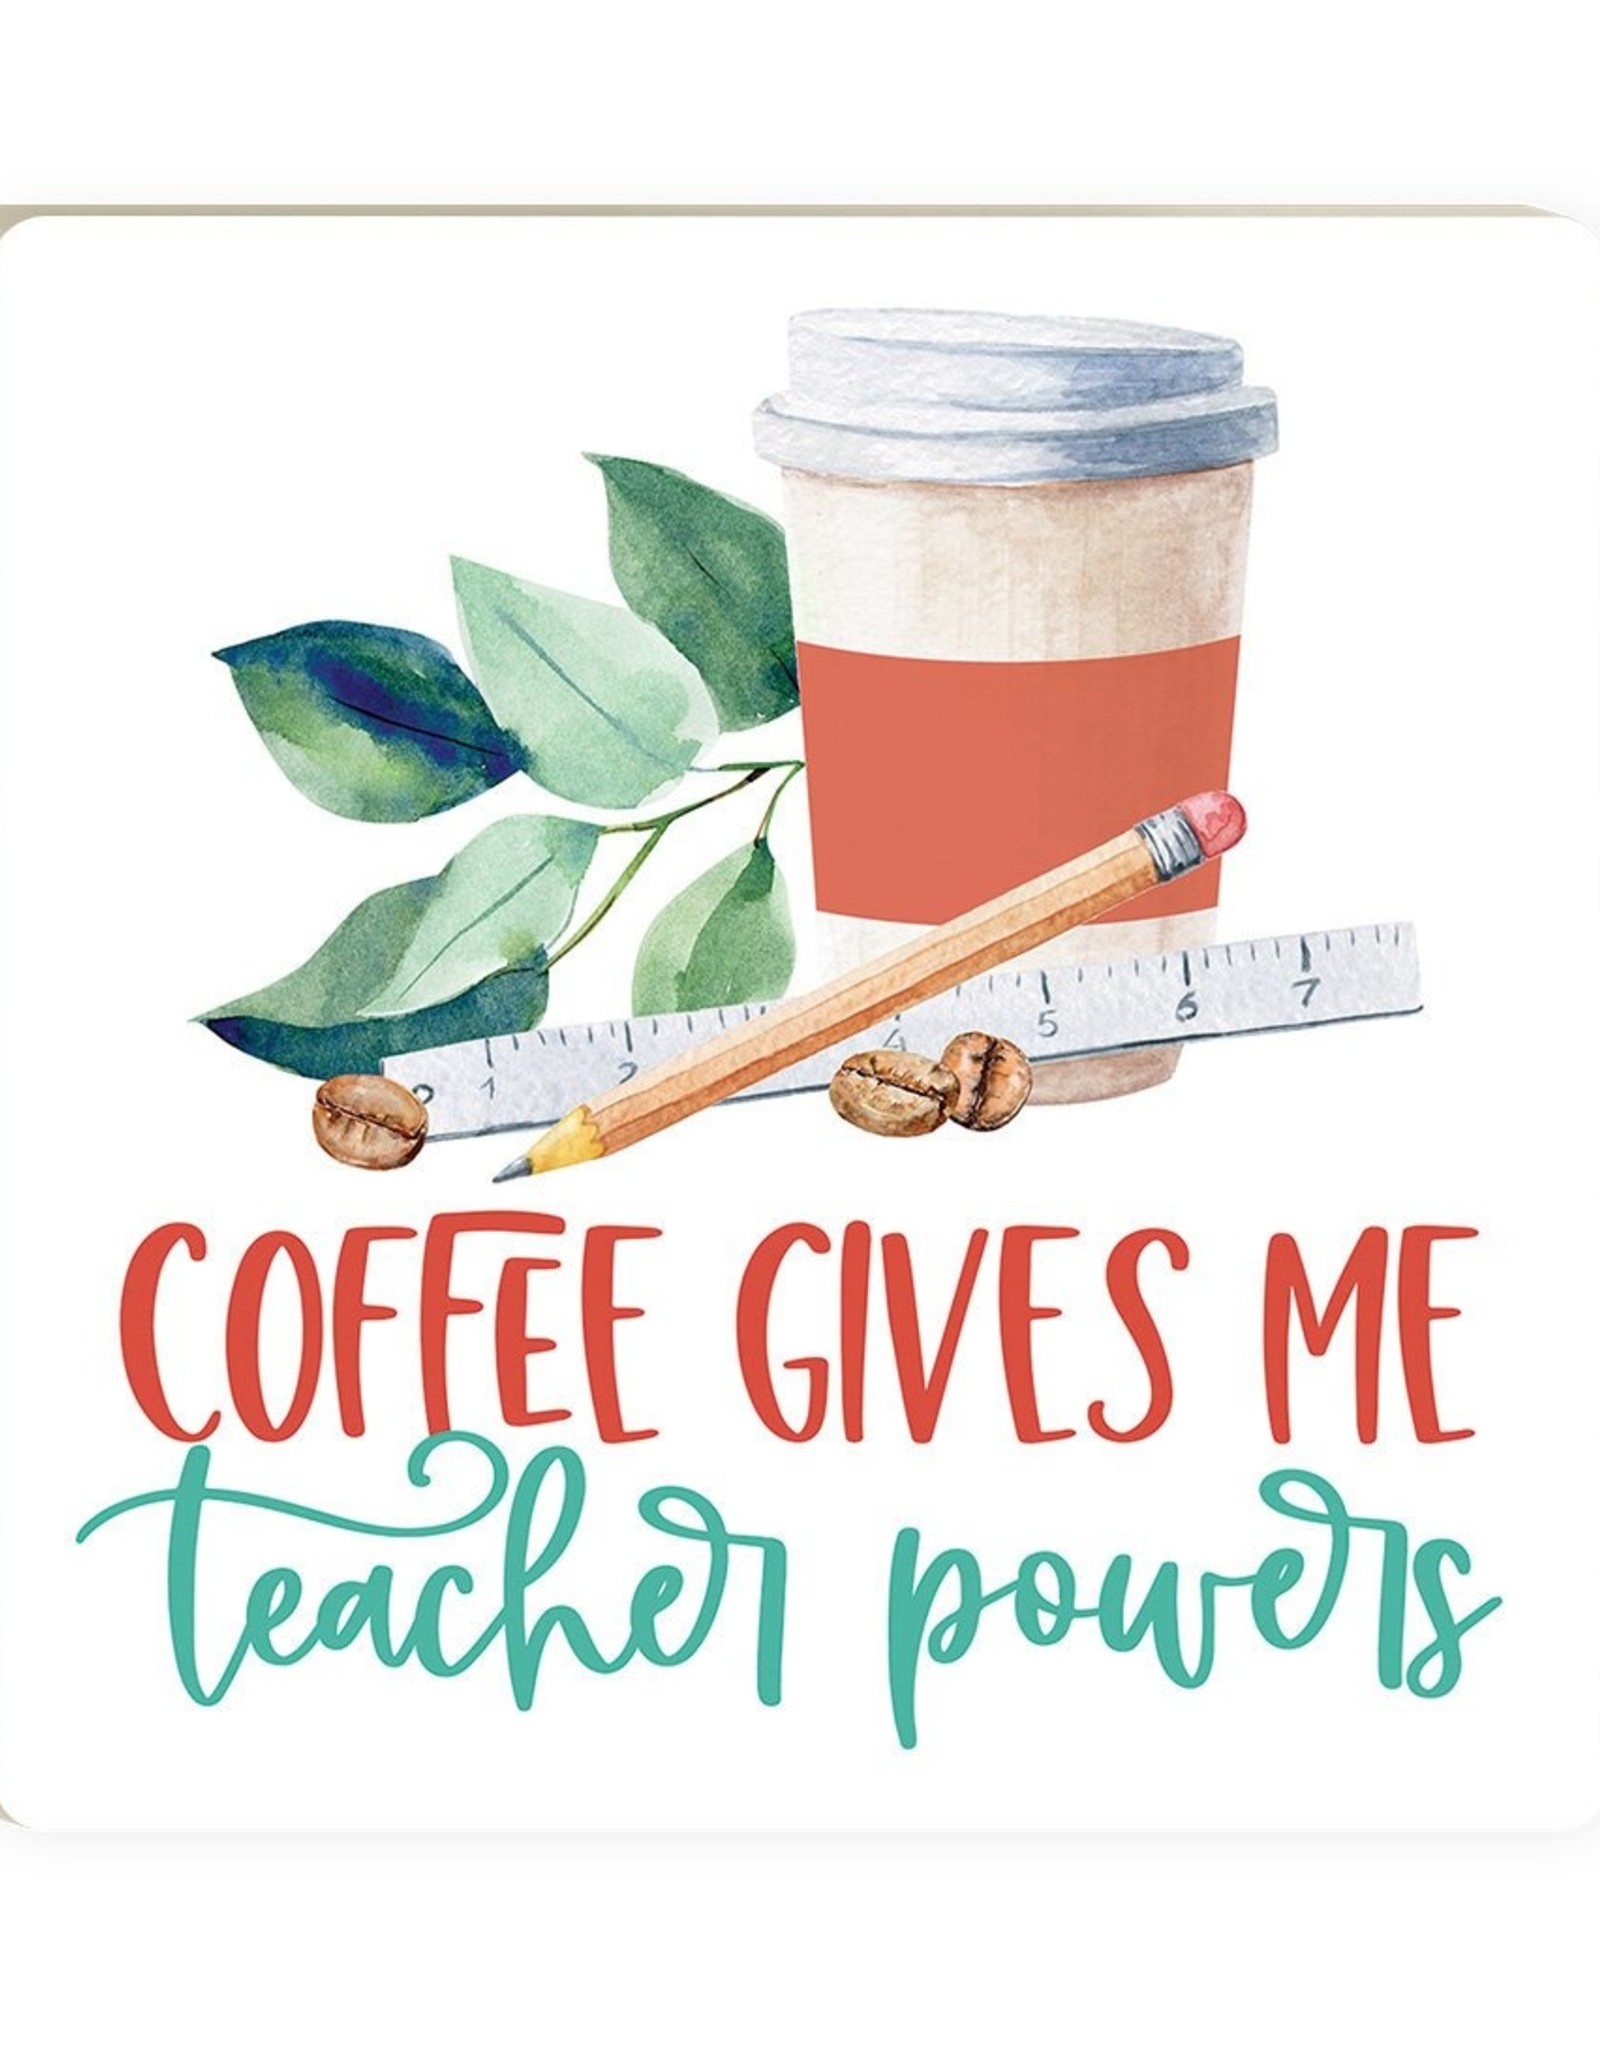 Coaster-Ceramic-Coffee Gives Me Teacher